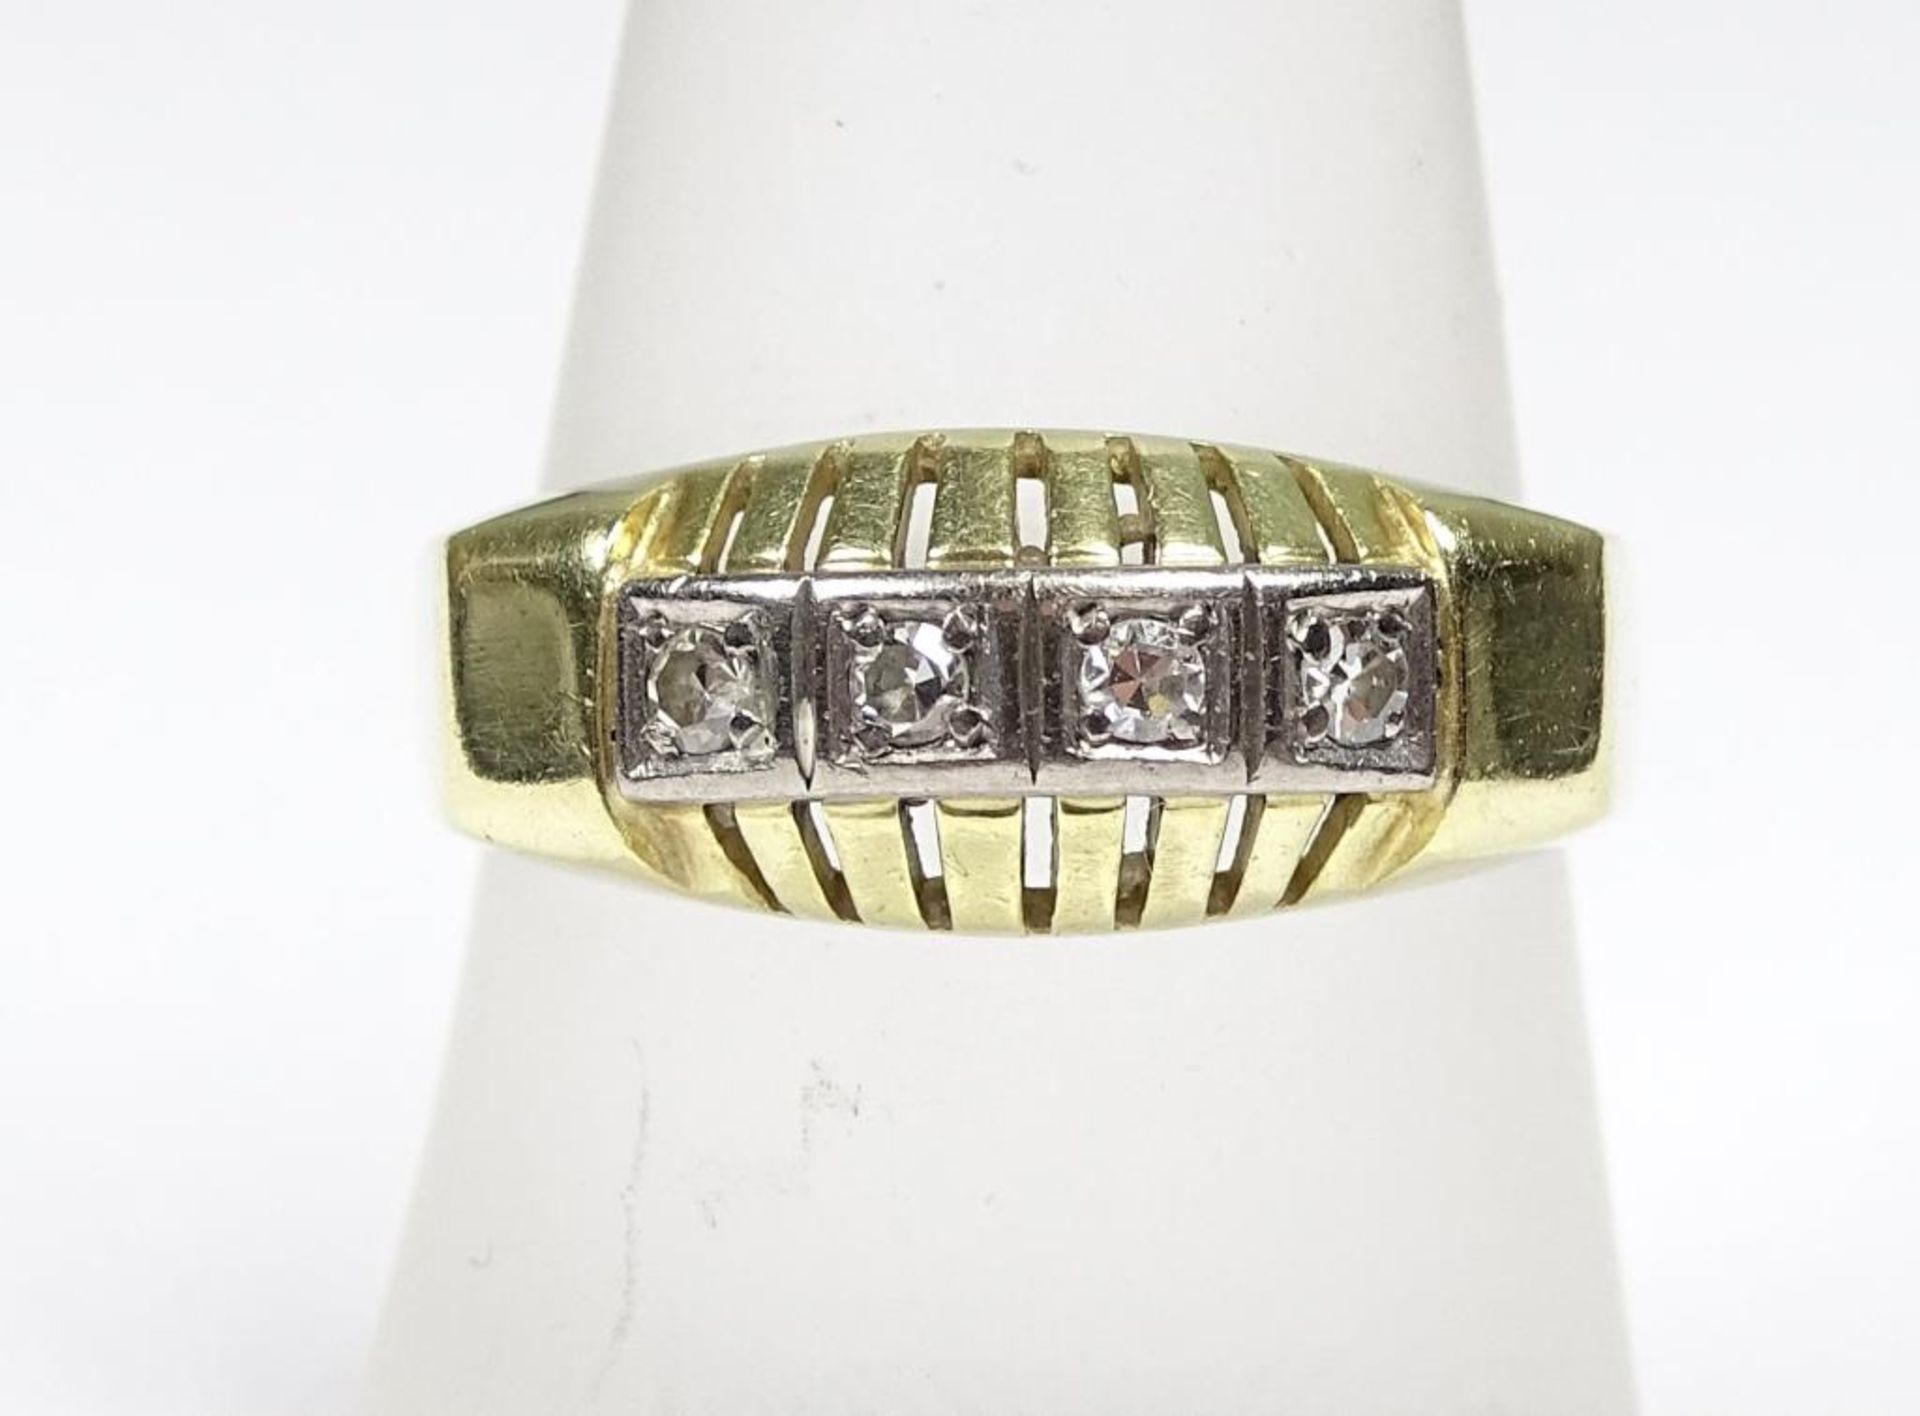 Diamant-Ring GG 585/000 mit 4 Diamanten, zus. 0,08 ct W/VS, RG 55, 4,1 g